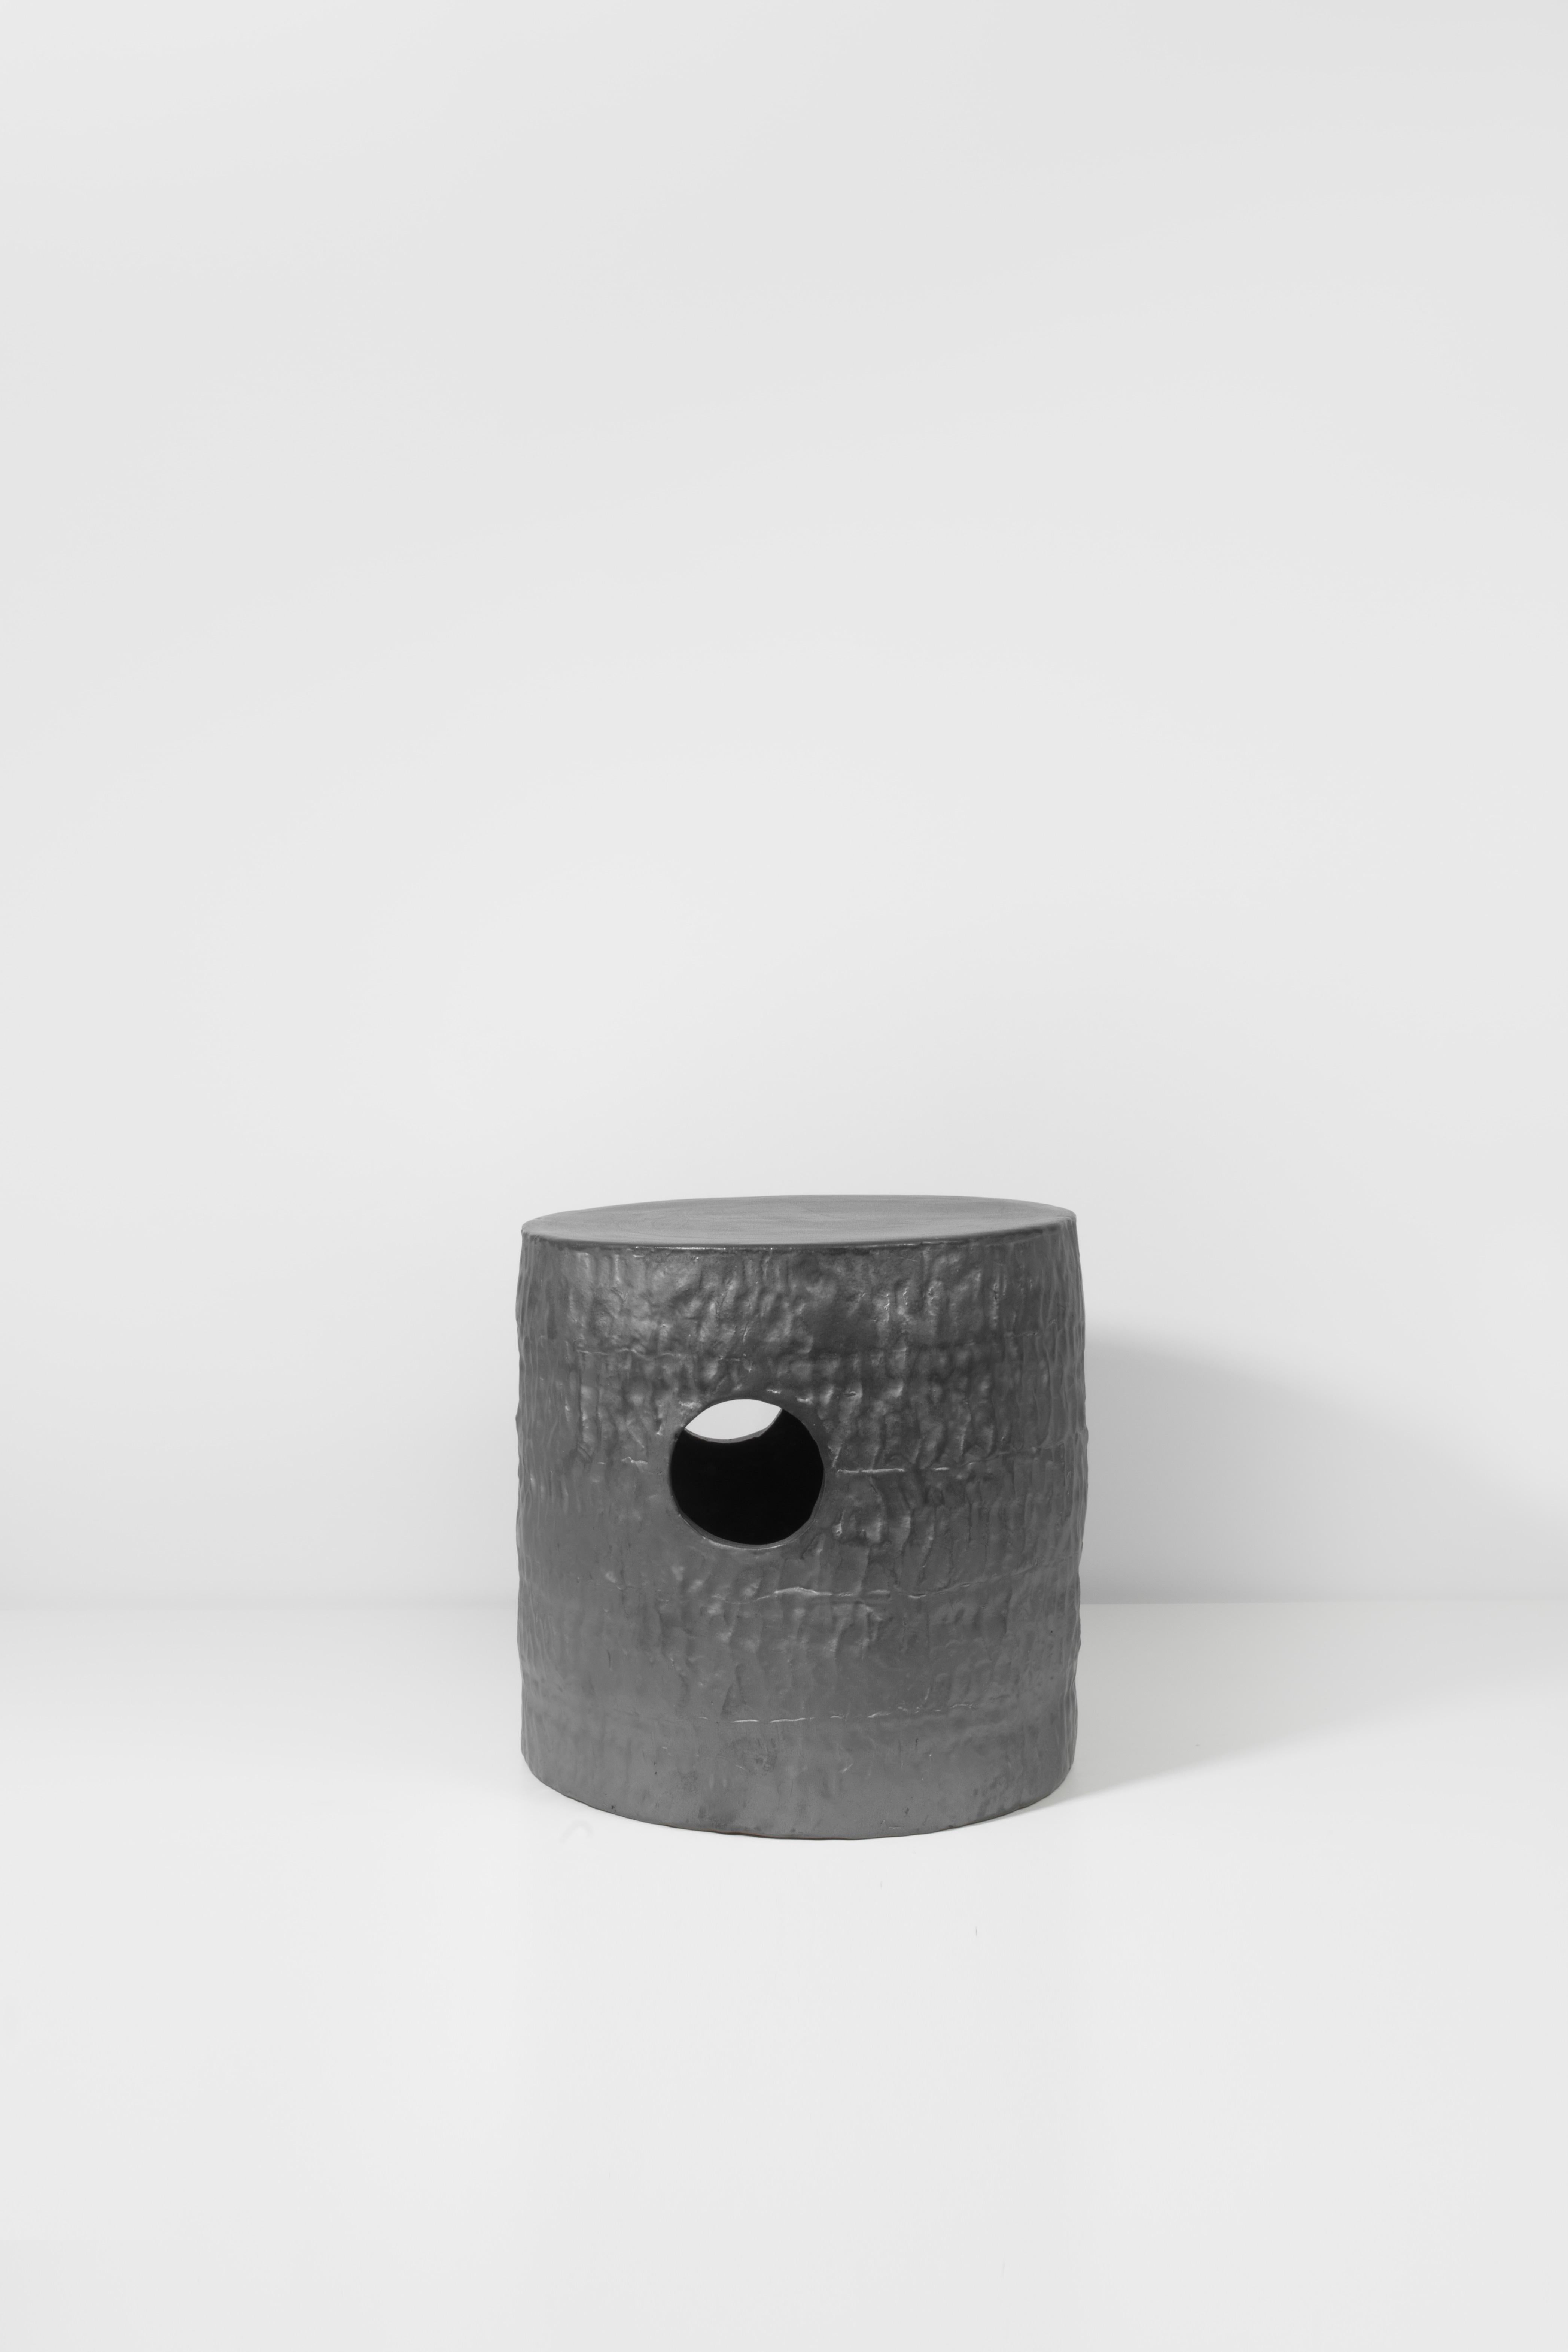 Minimalist Jonathan Nesci w/ Robert Pulley Ceramic Stool with Black Coppered Glaze 18/16